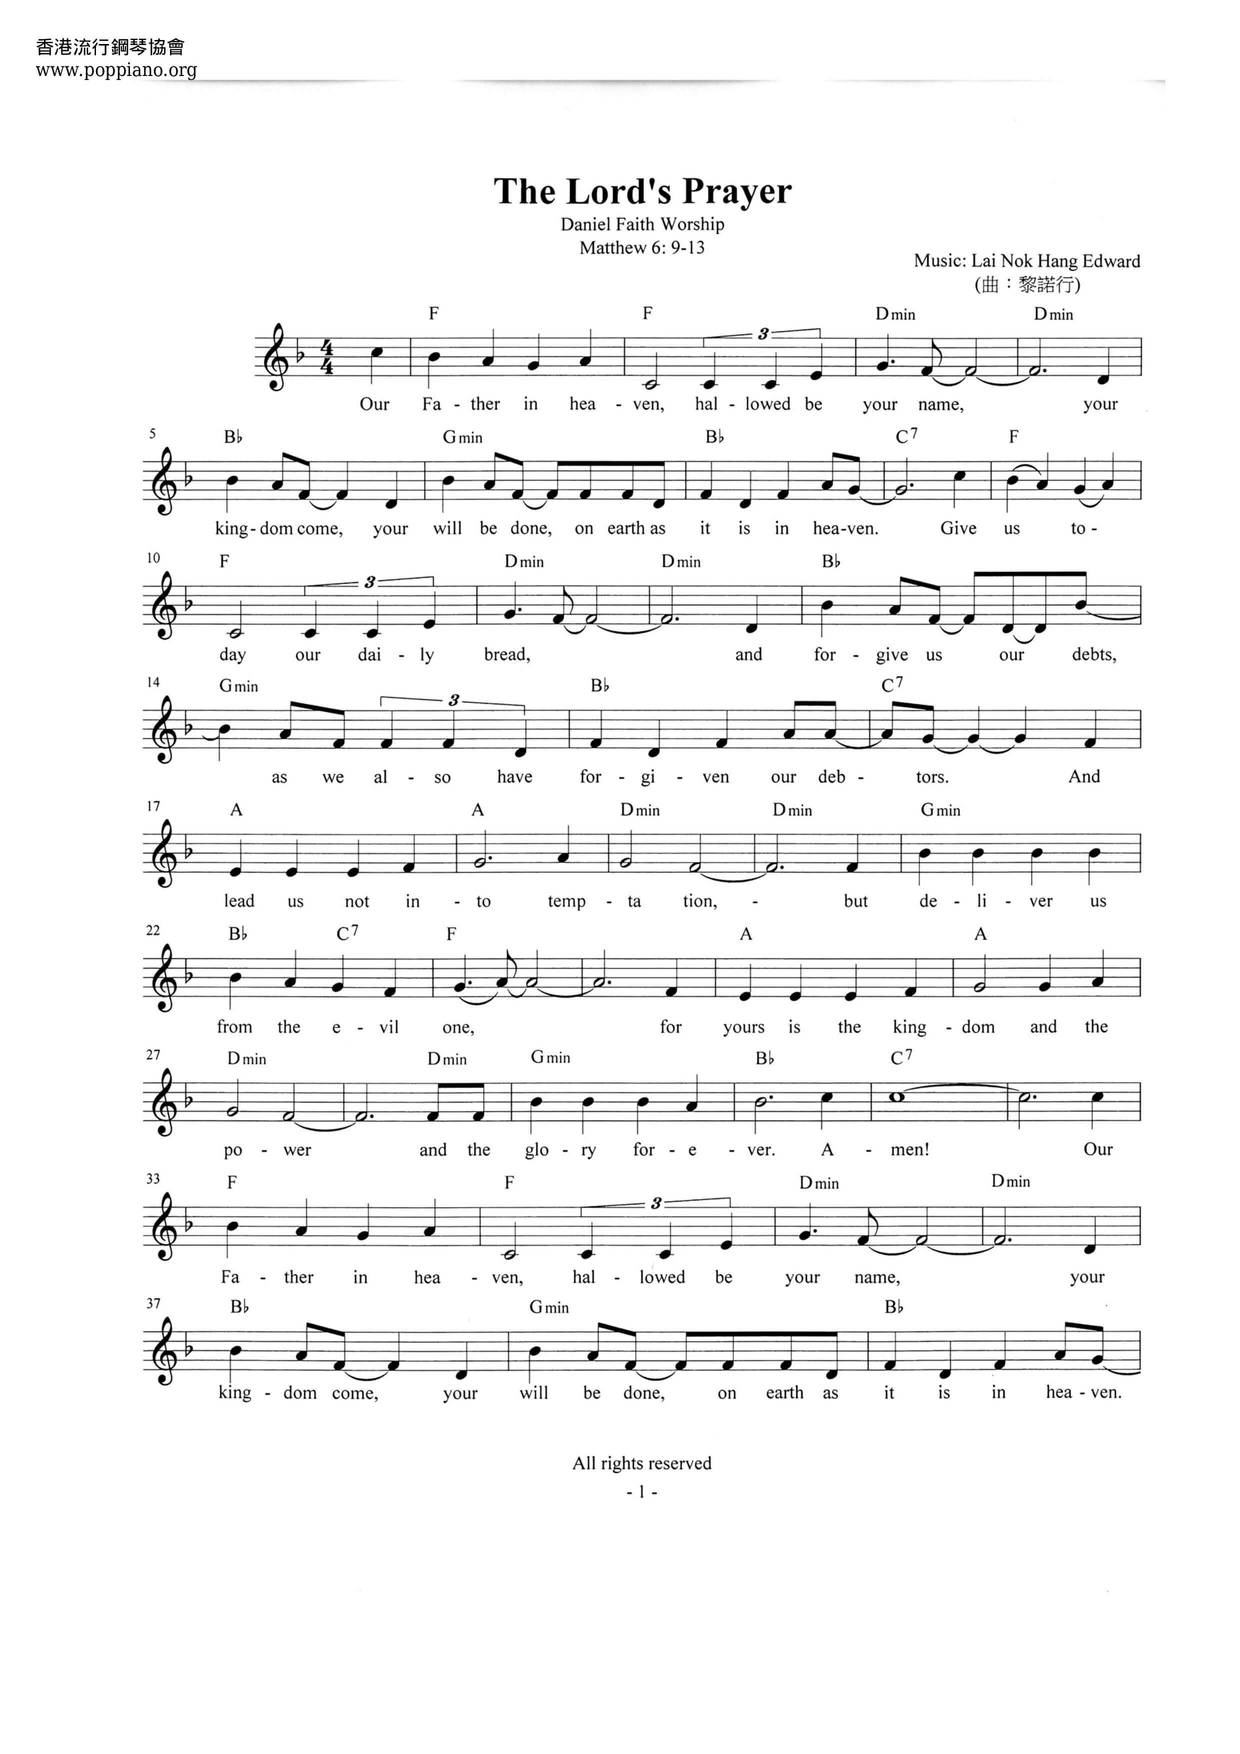 The Lord's Prayer Score